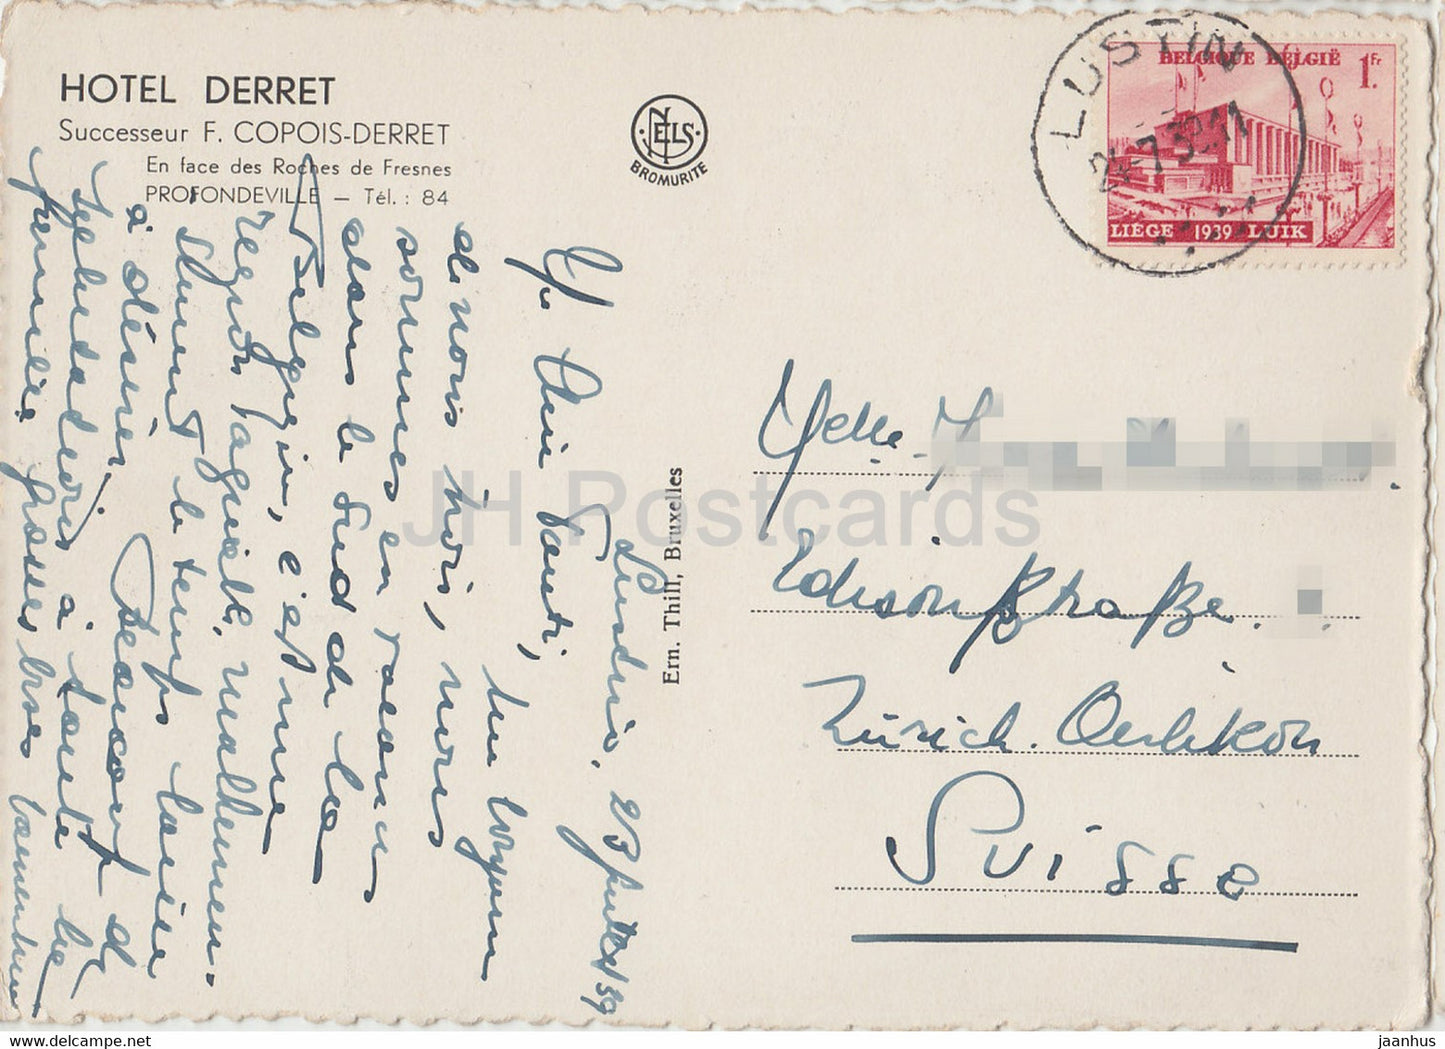 Profondeville - Vue Generale - Hotel Derret - old postcard - 1939 - Belgium - used